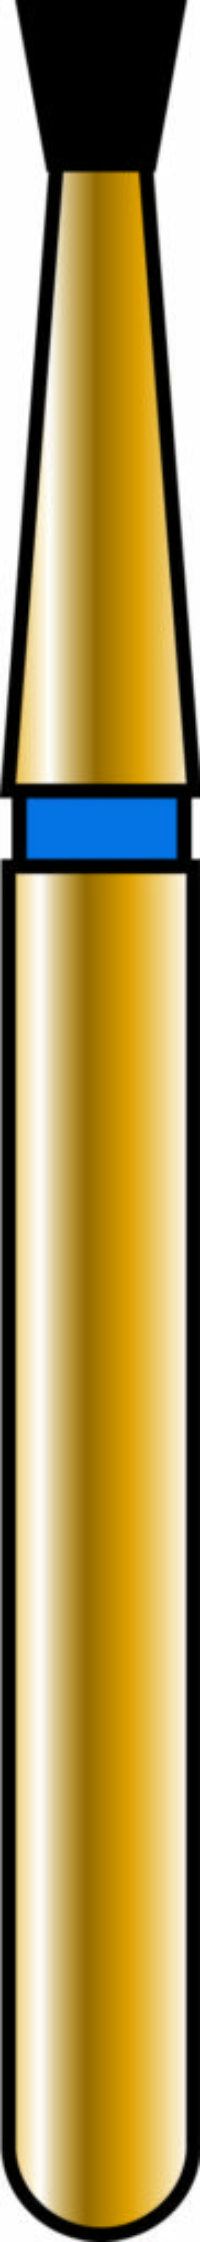 Inverted Cone 14-1.4mm Gold Diamond Bur - Coarse Grit